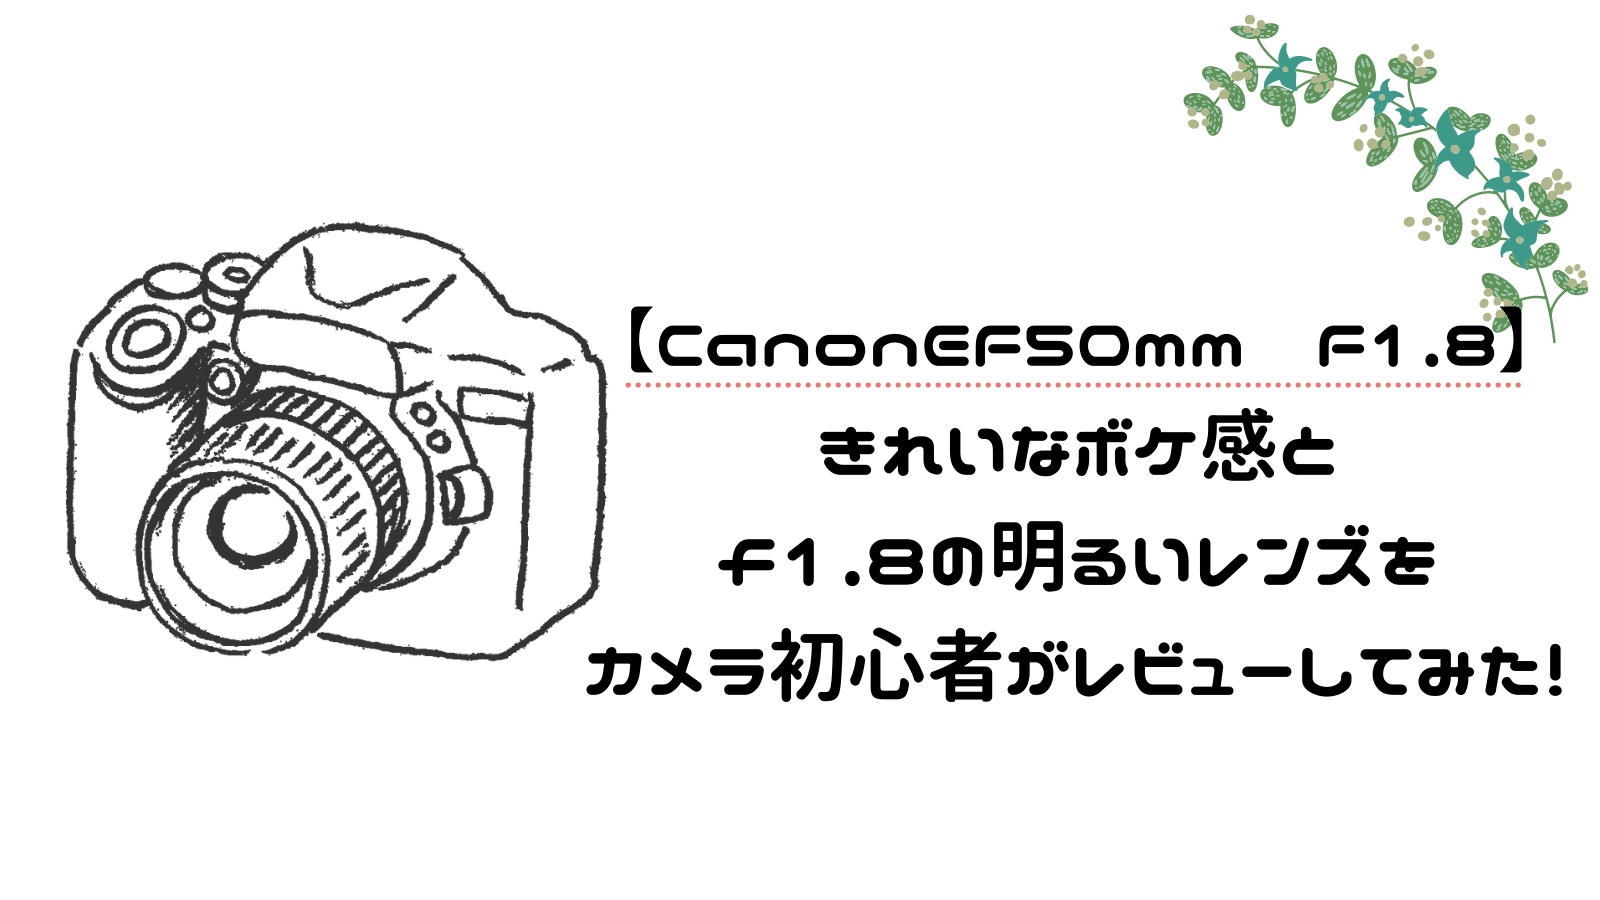 canonef50mm f1.8